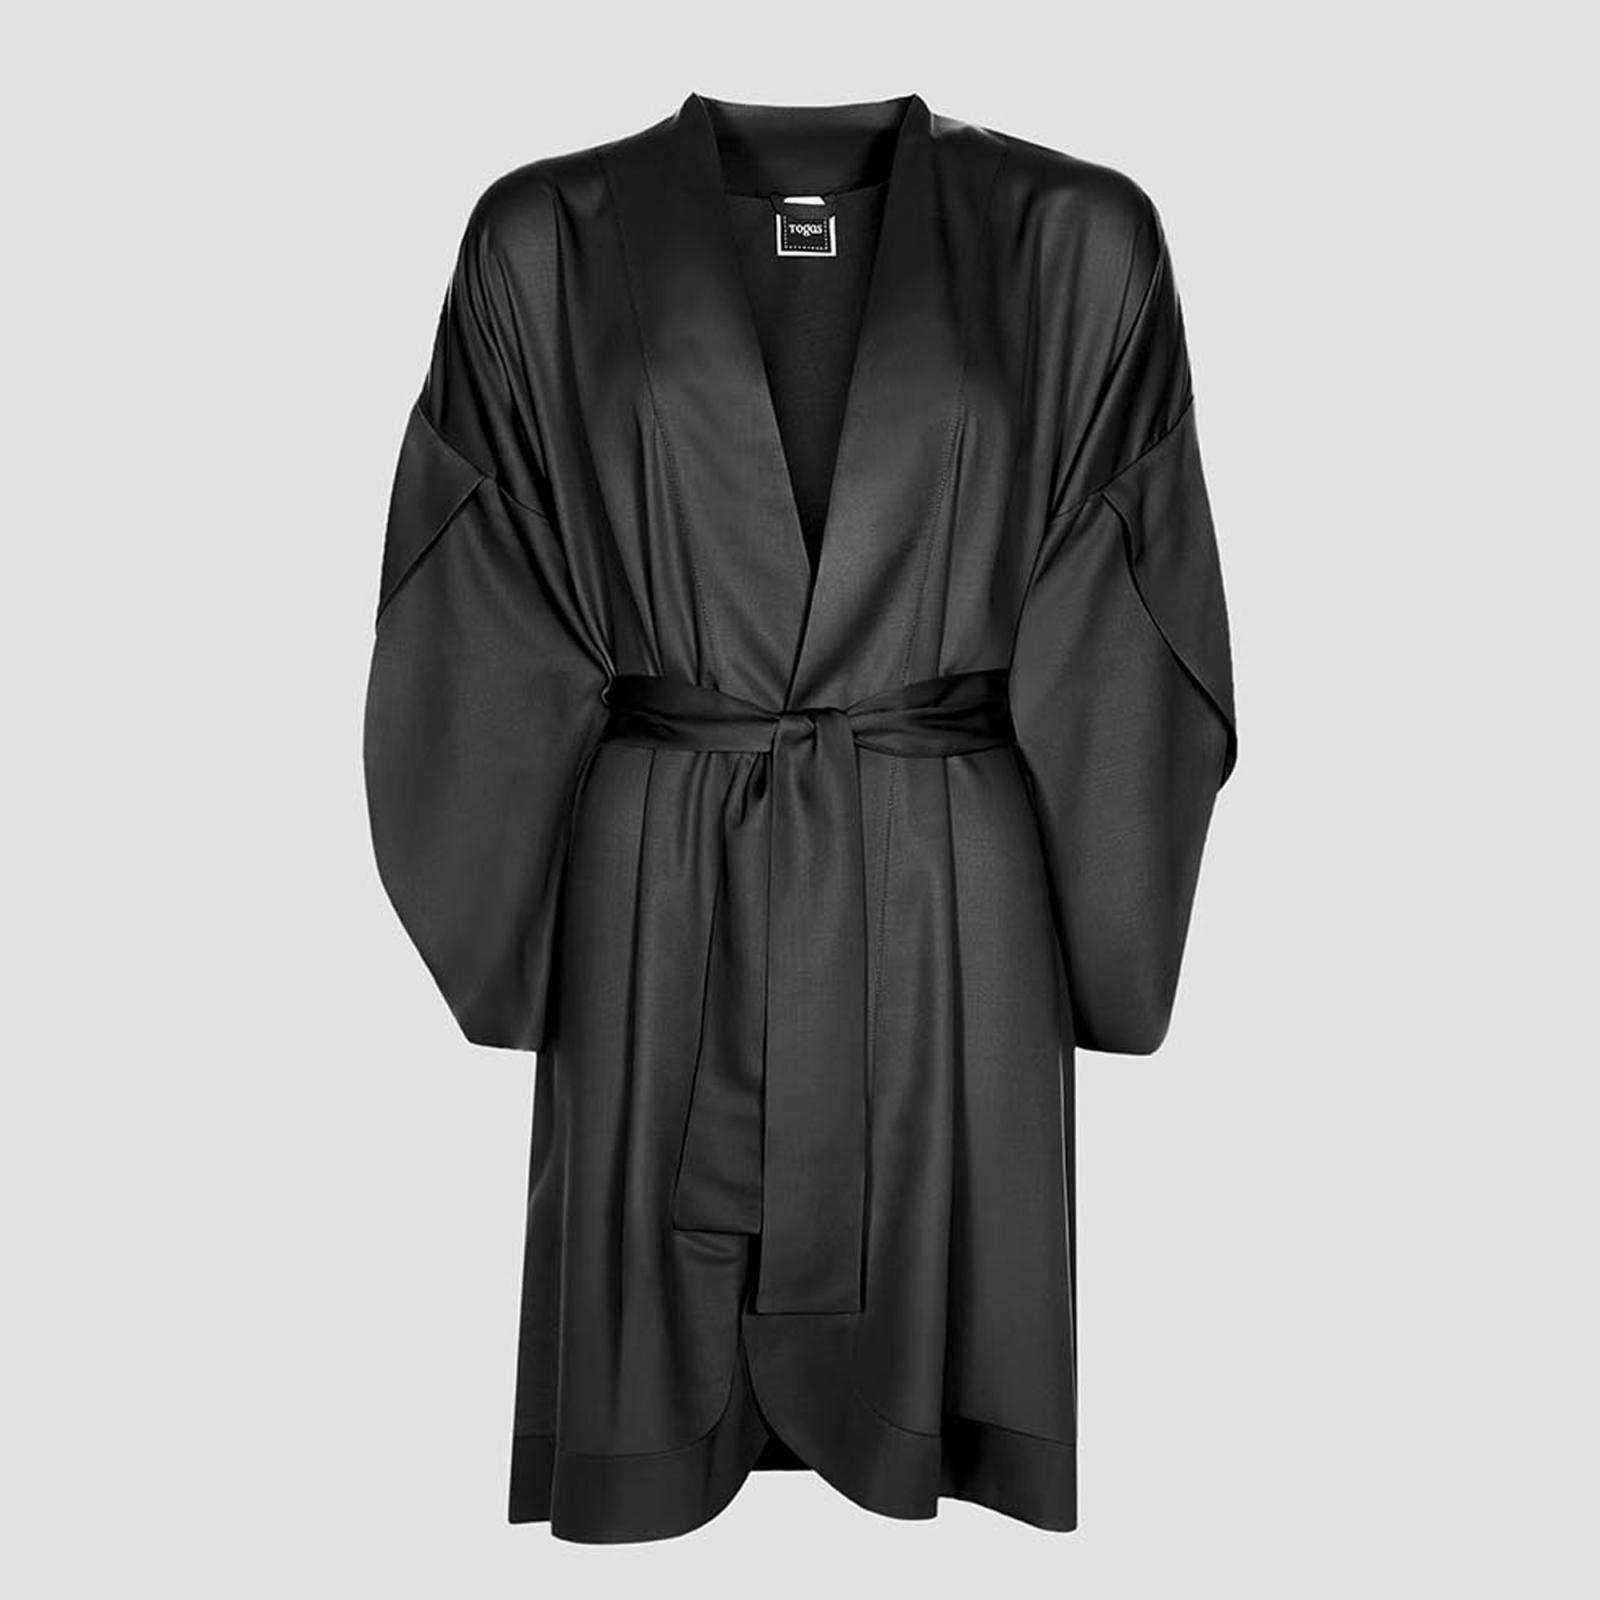 Халат-кимоно короткое Togas Наоми чёрное S (44) халат кимоно togas наоми розовый xxl 52